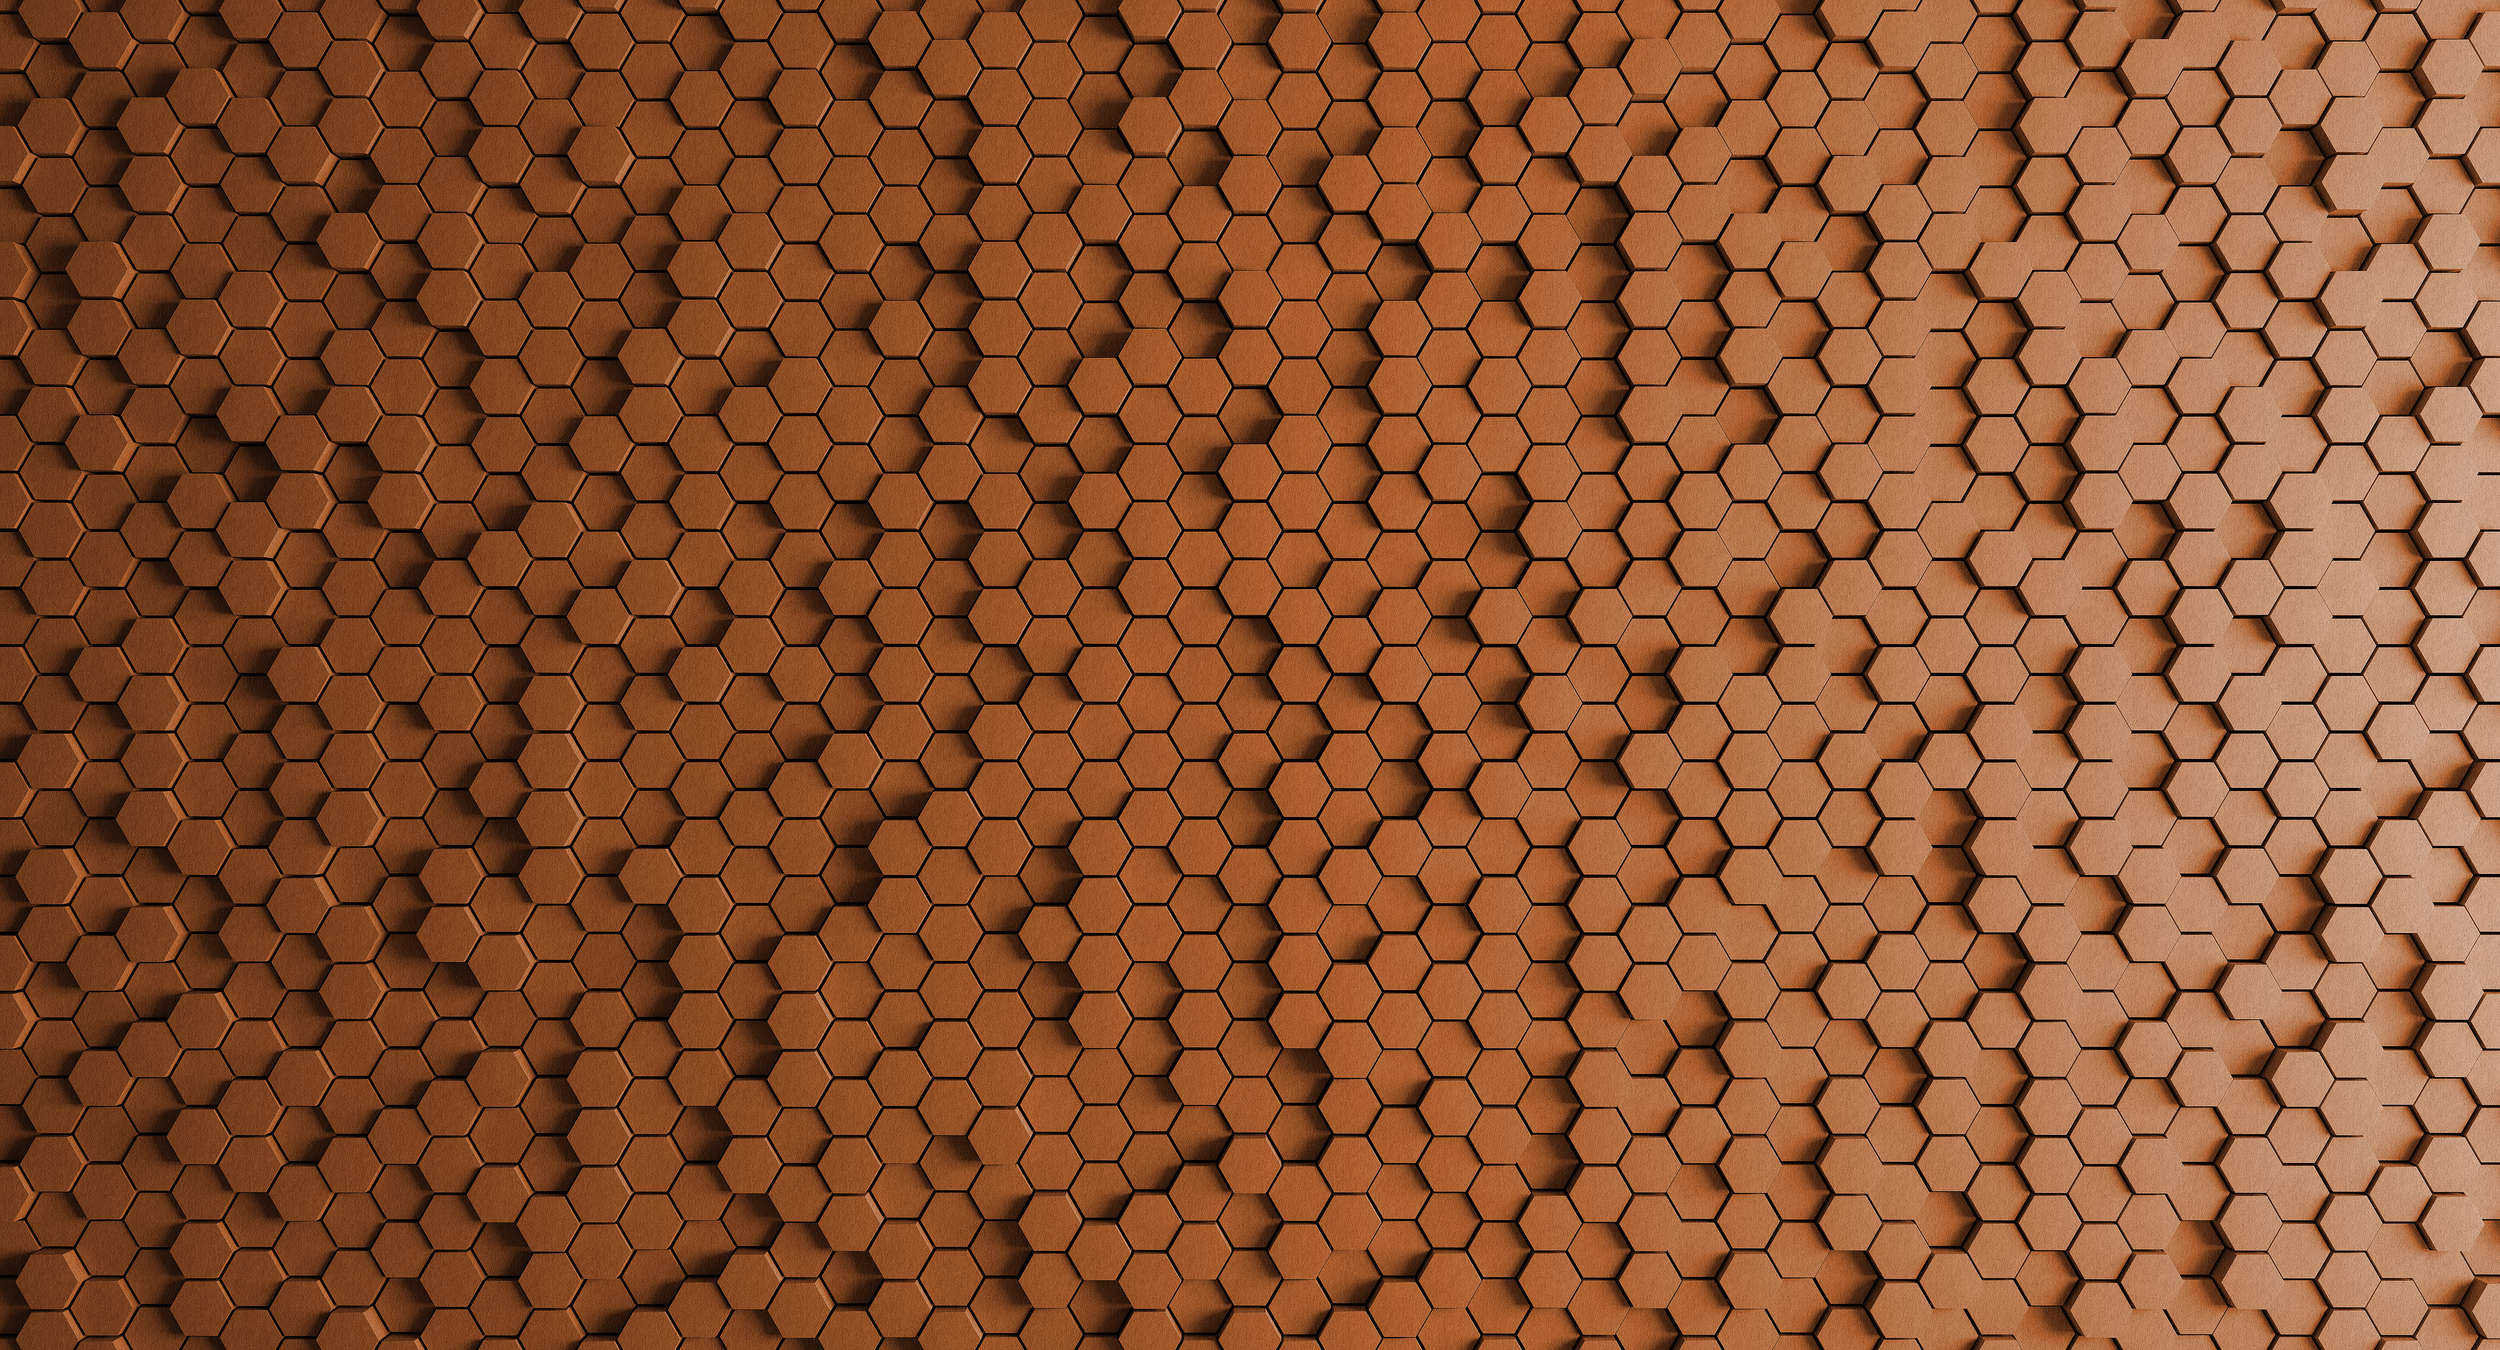             Panal 2 - Papel pintado 3D con diseño panal naranja - fieltro estructura - cobre, naranja | tejido sin tejer estructura
        